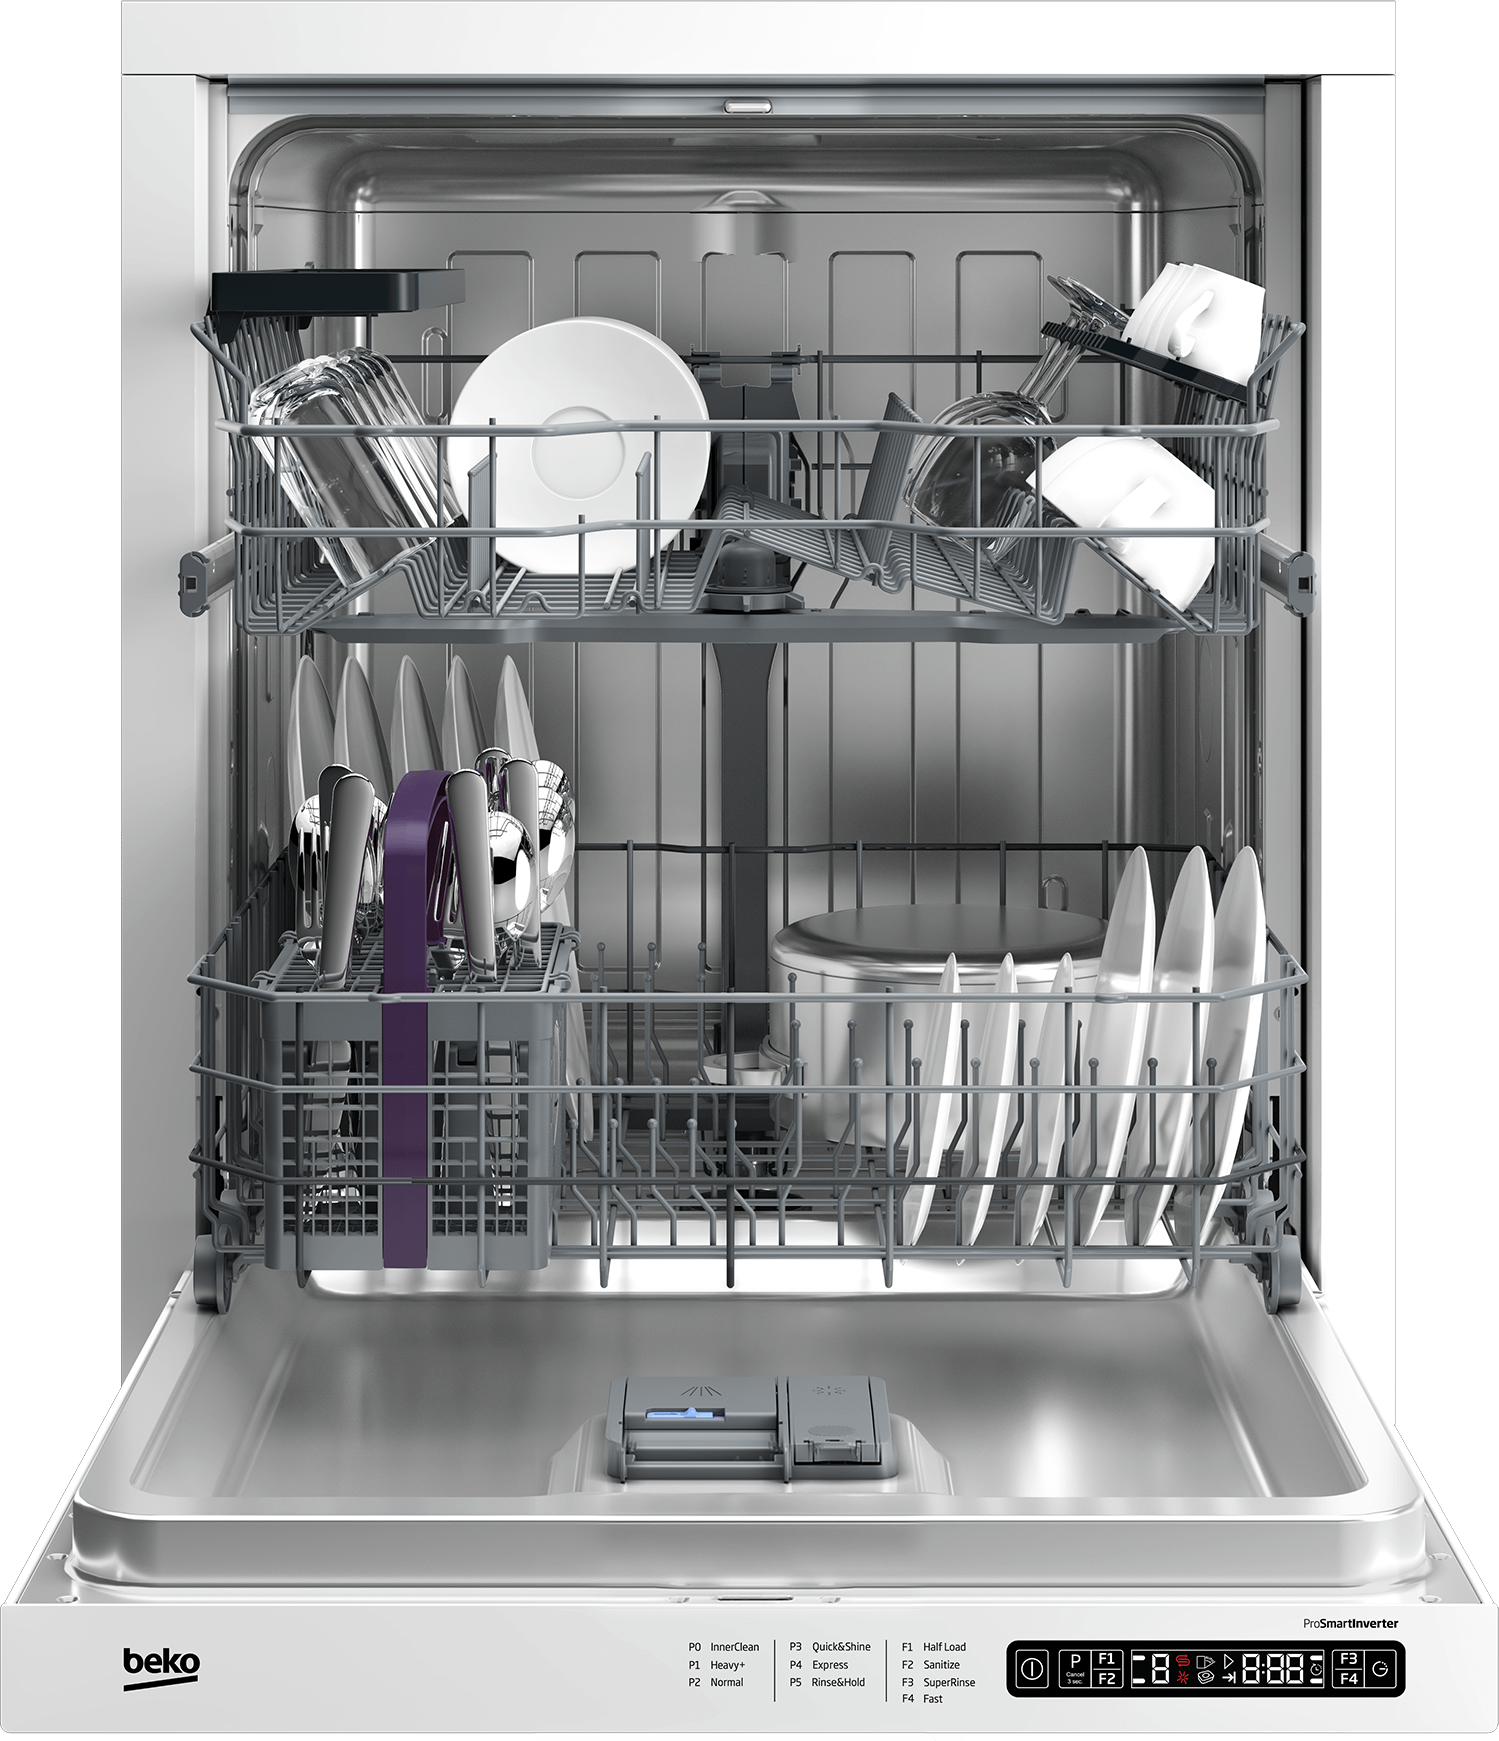 Beko Full Size Dishwasher with (14 place settings, 48.0